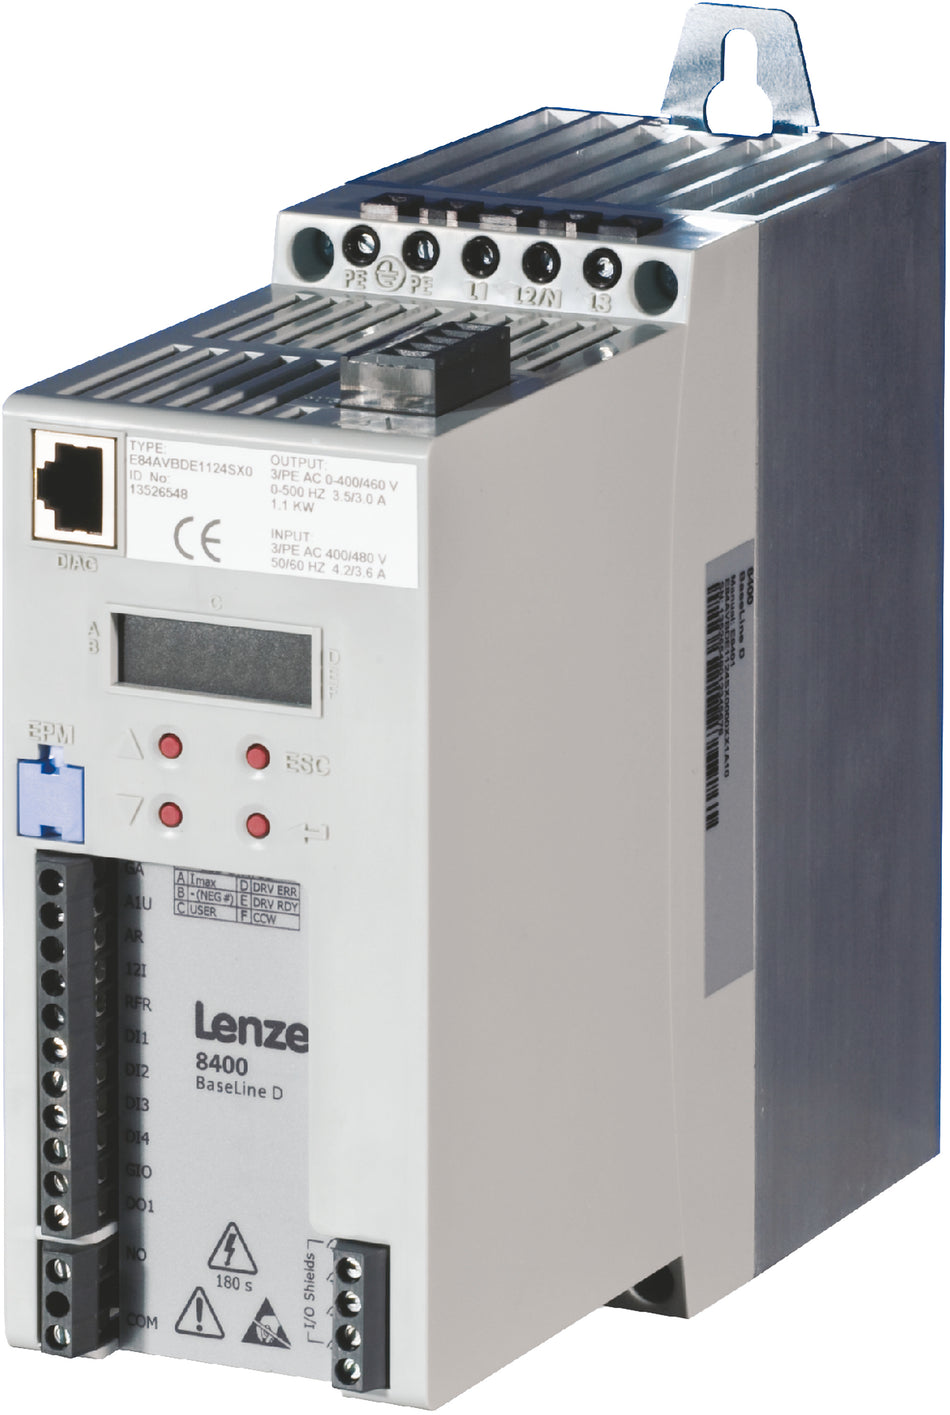 Lenze Inverter Drives 8400 BaseLine - E84AVBDE2222SX0XX3A34 2.2 kW